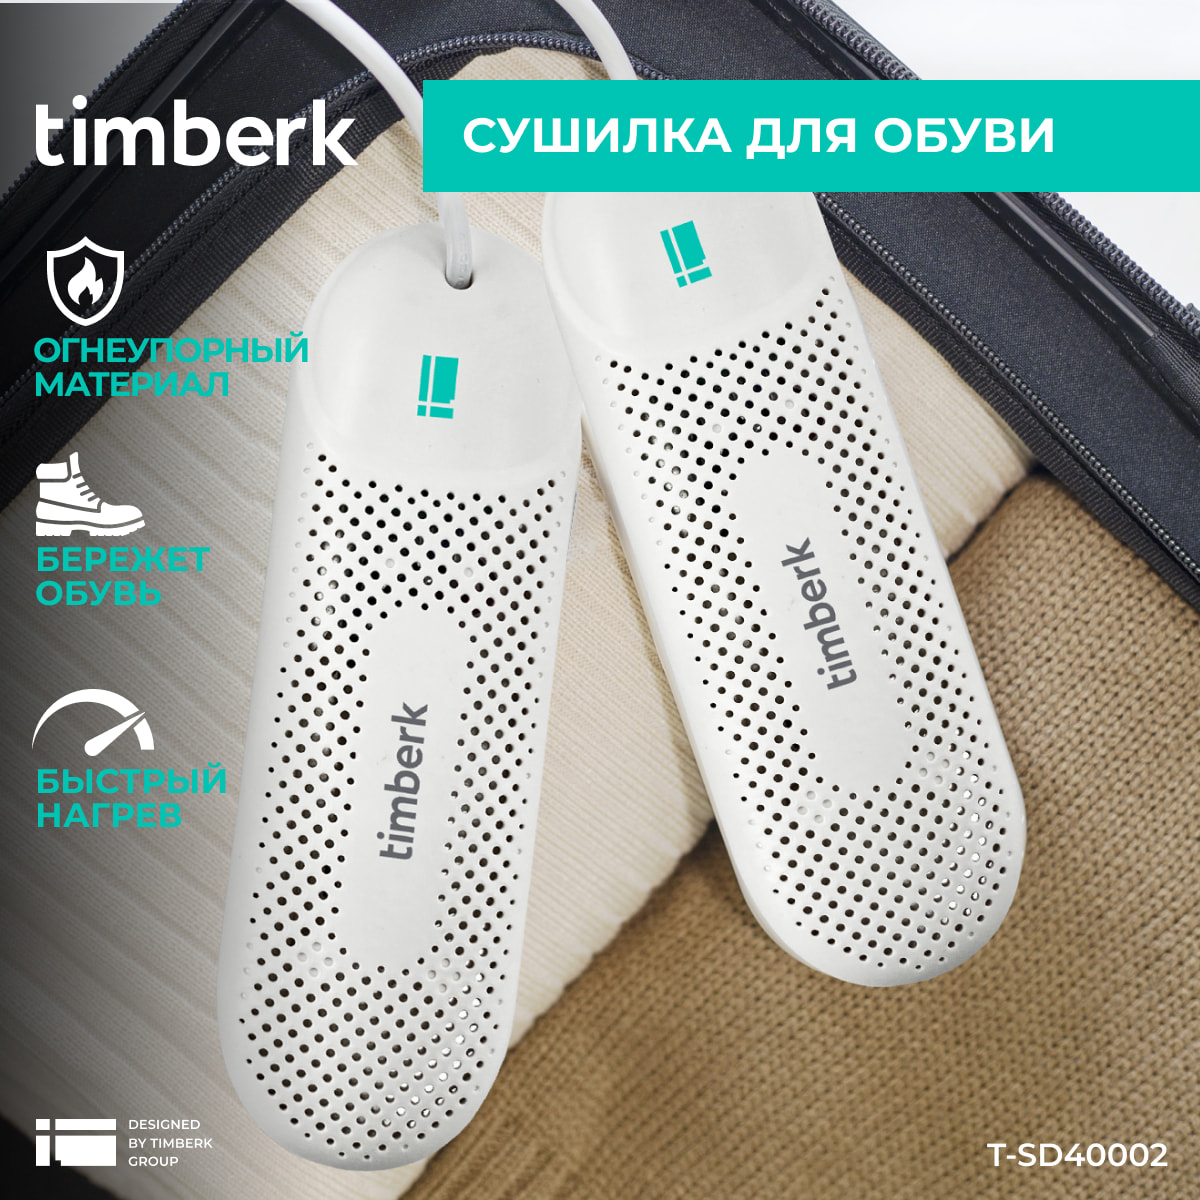 Сушилка для обуви Timberk T-SD40002